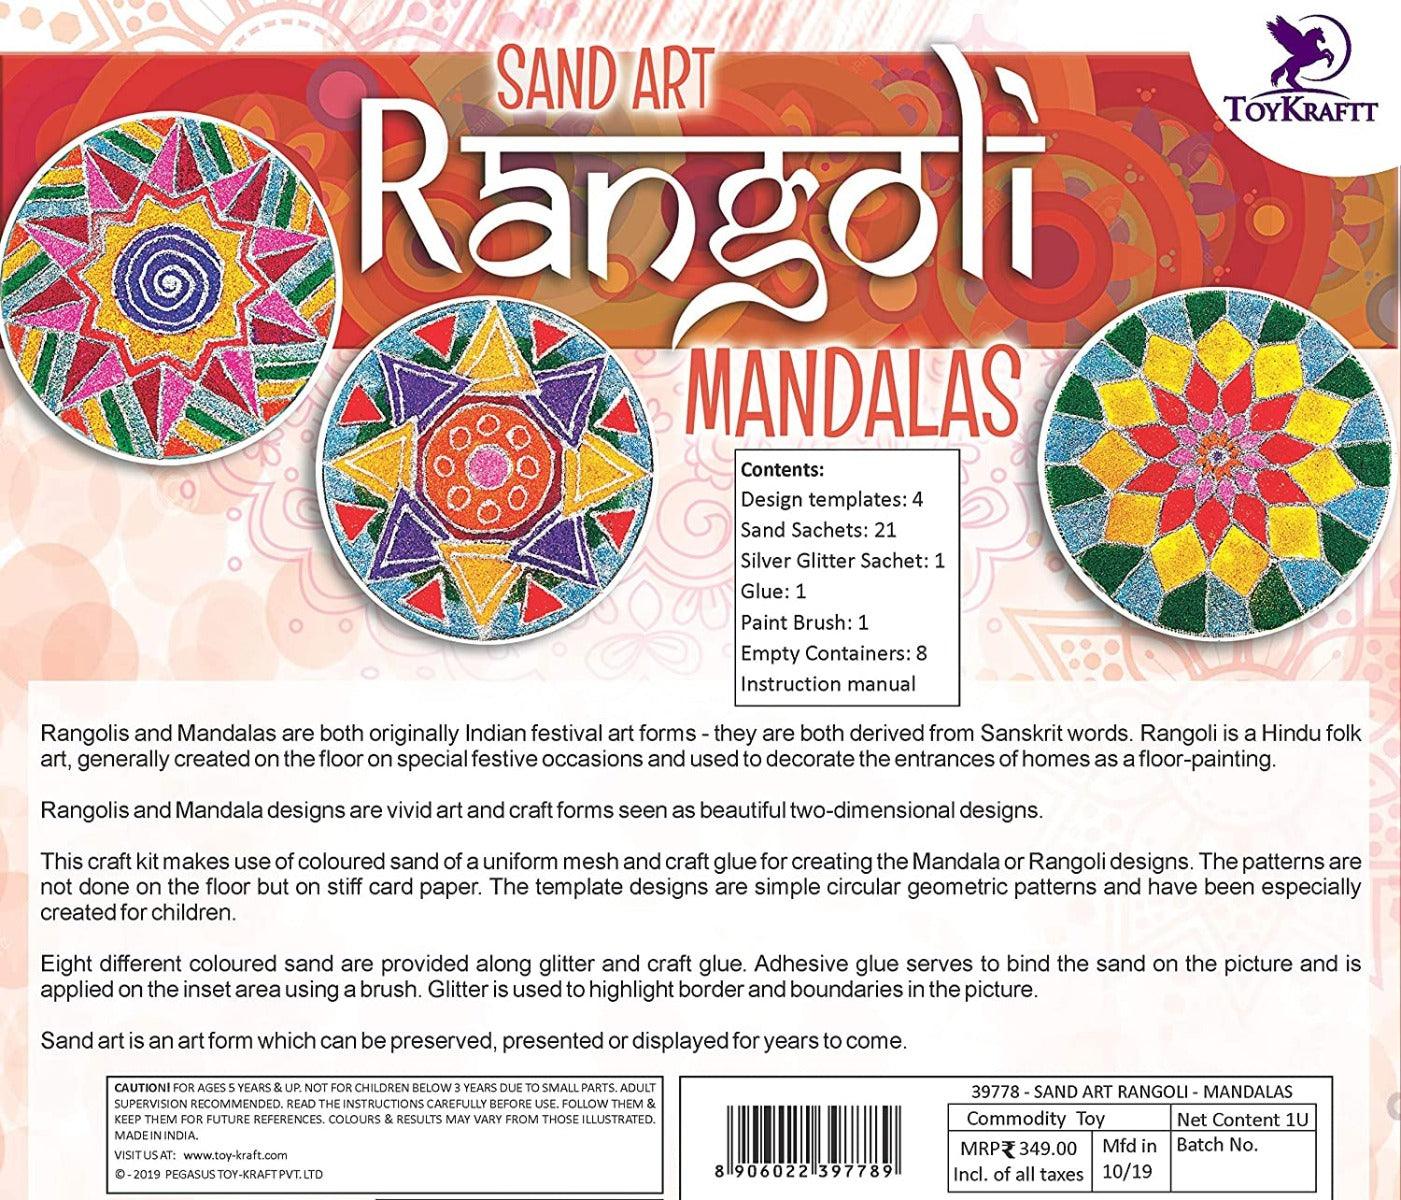 ToyKraft Sand Art Rangoli Mandala, Sand Art Kit for Kids